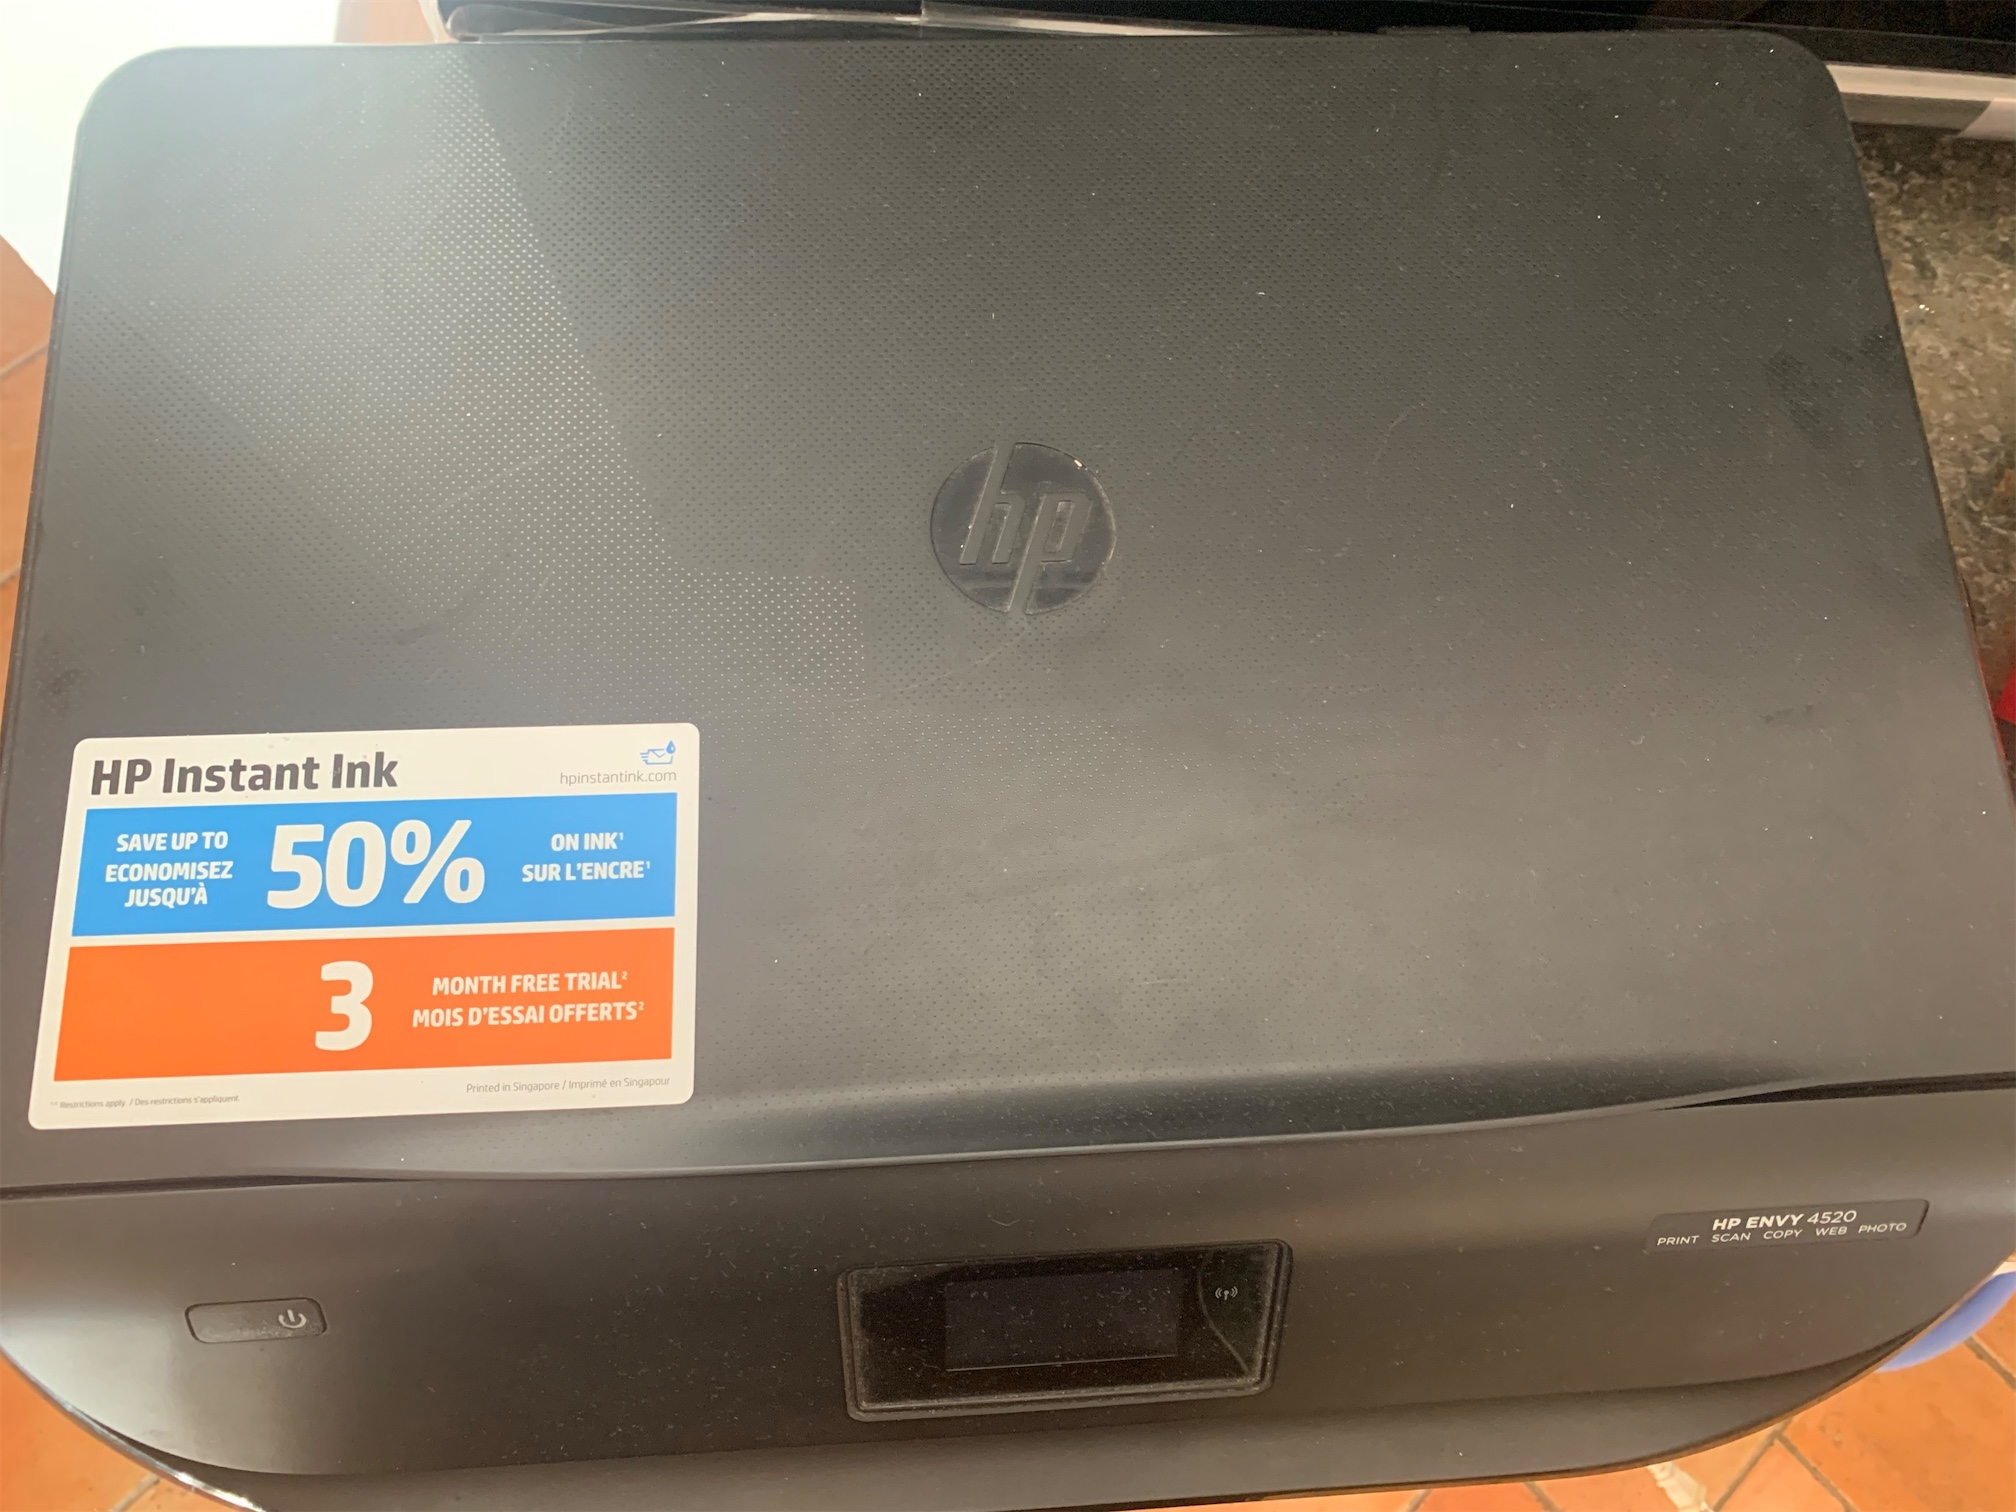 impresoras y scanners - Impresora HP Instant Ink 1